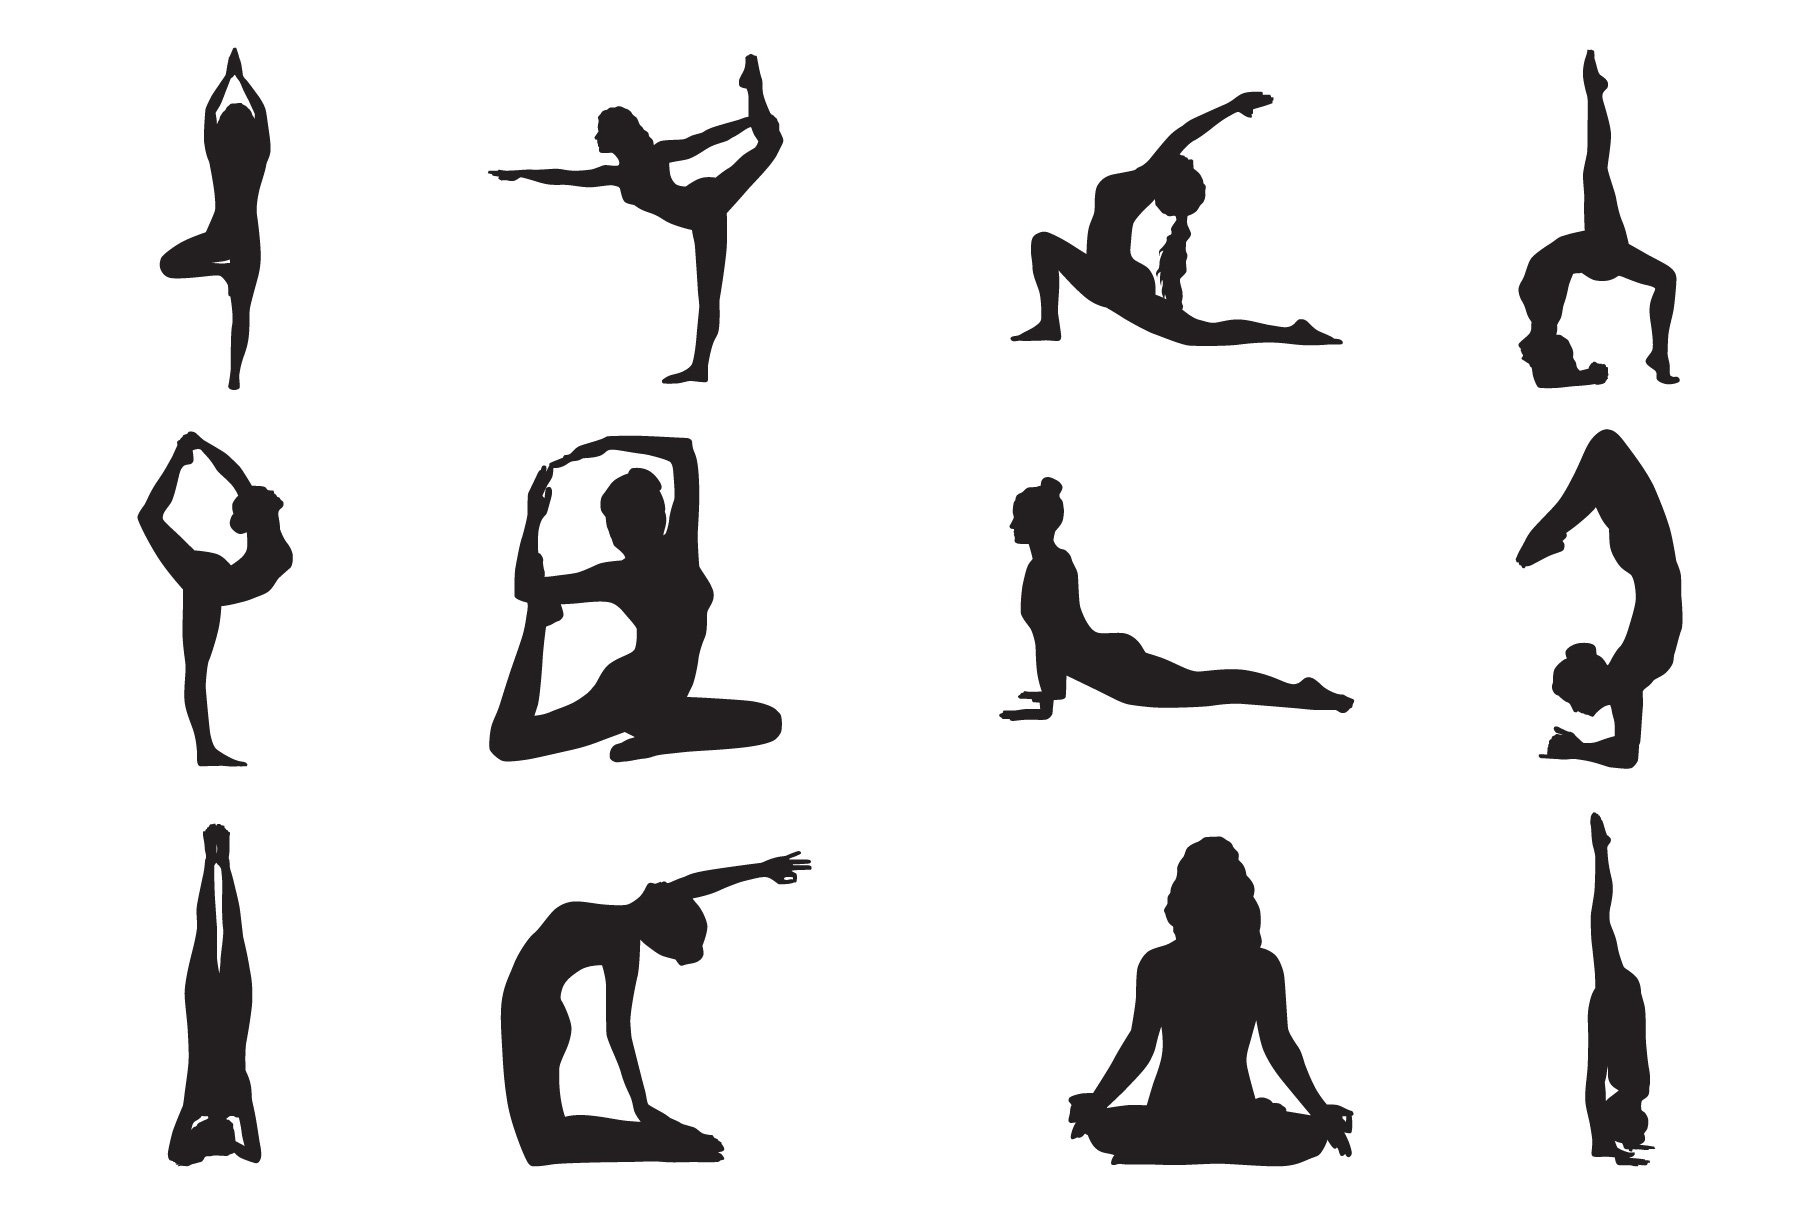 yoga meditation pose silhouette